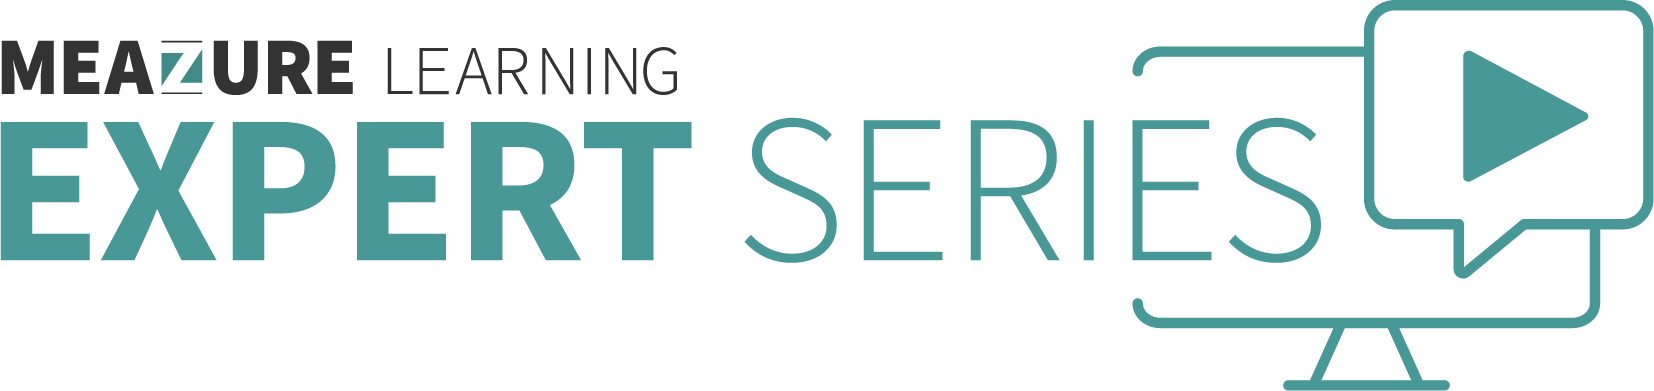 Meazure Learning Expert Series logo